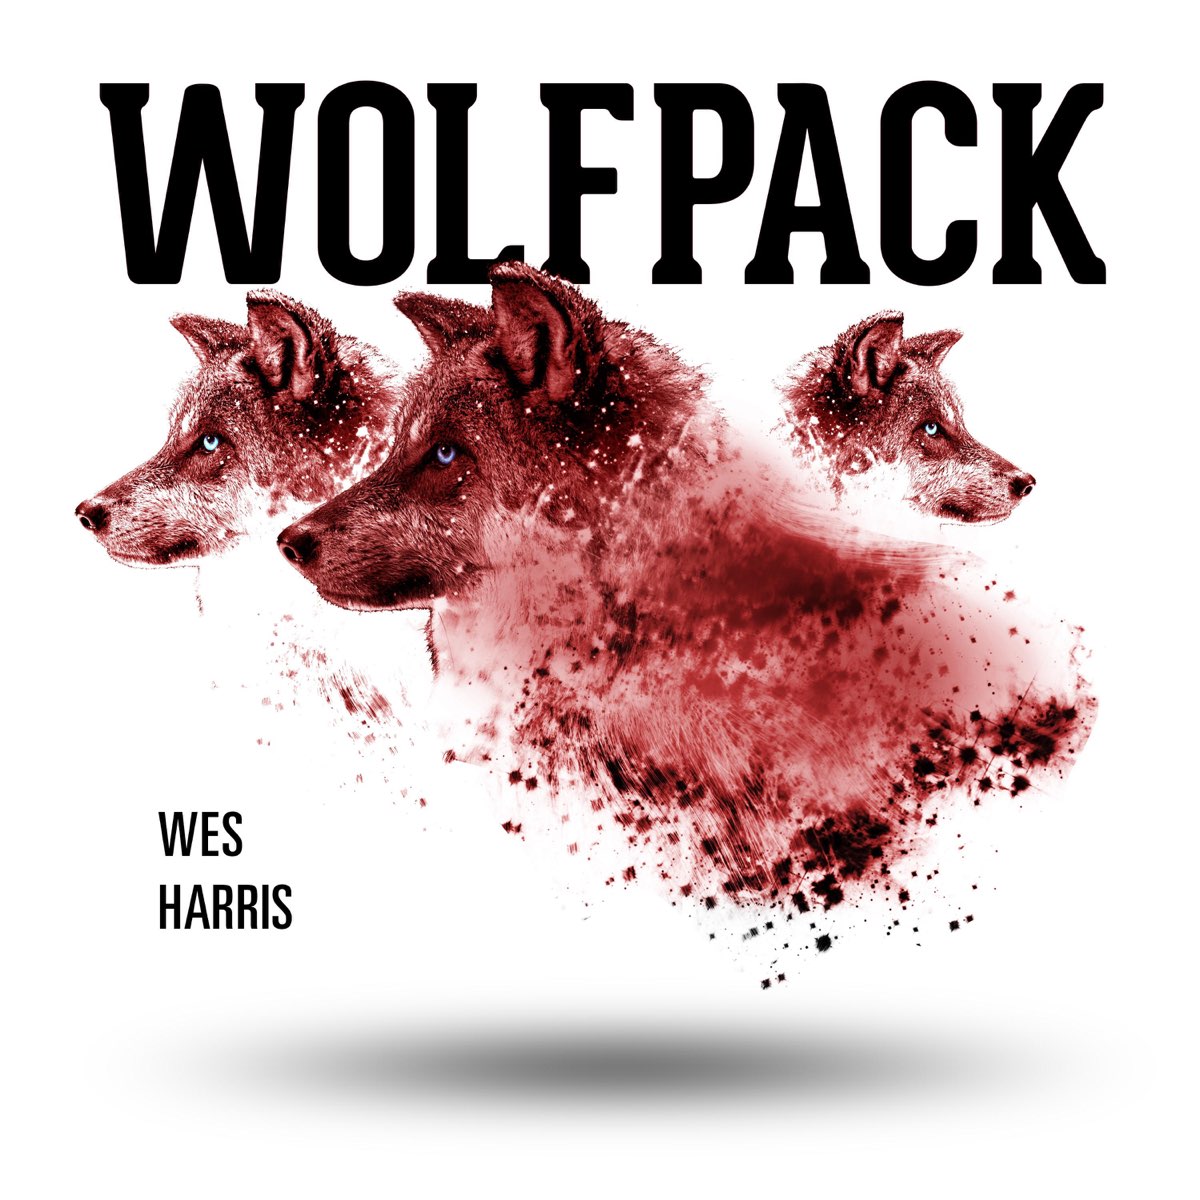 Wolfpack слушать. Wes harris feel the beat